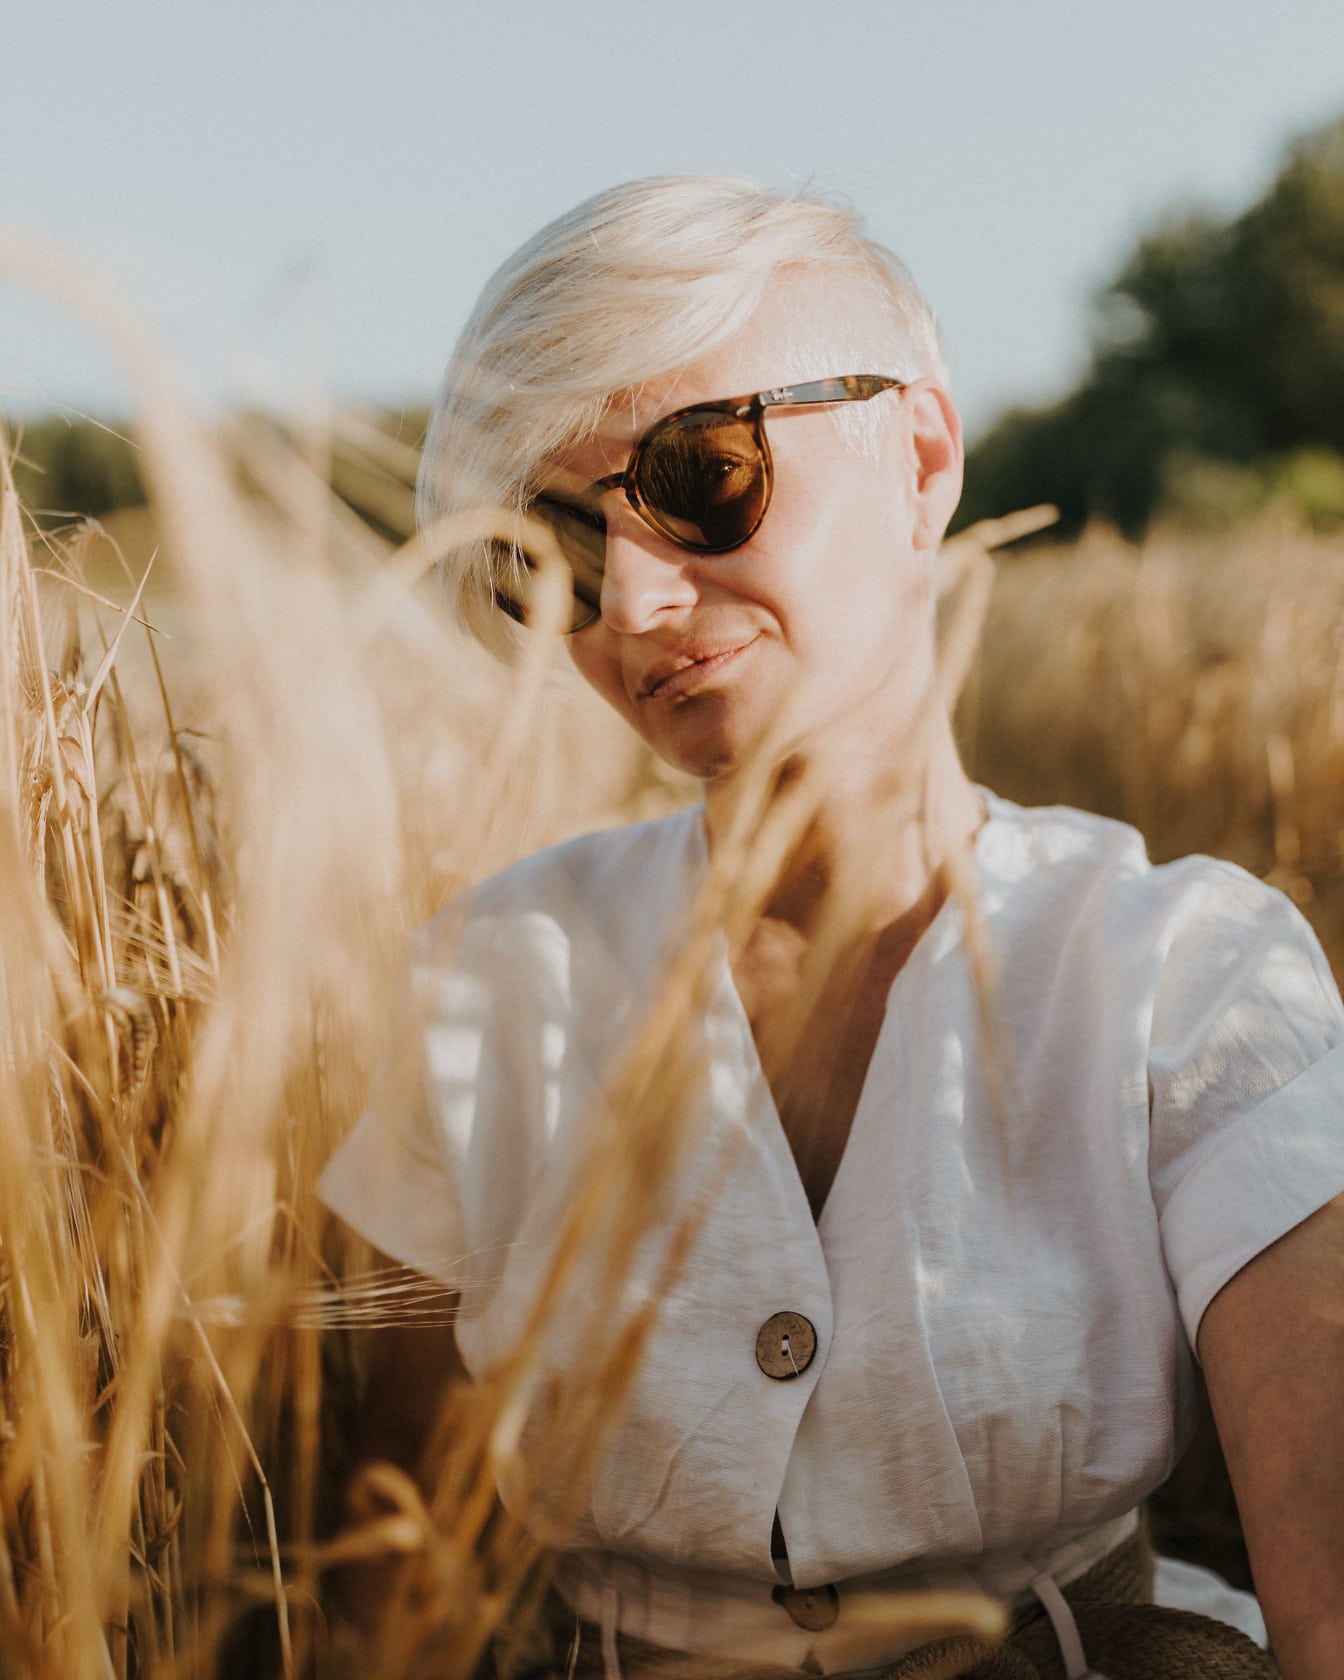 Potret seorang wanita muda cantik dengan rambut pendek di ladang gandum pada hari musim panas yang cerah